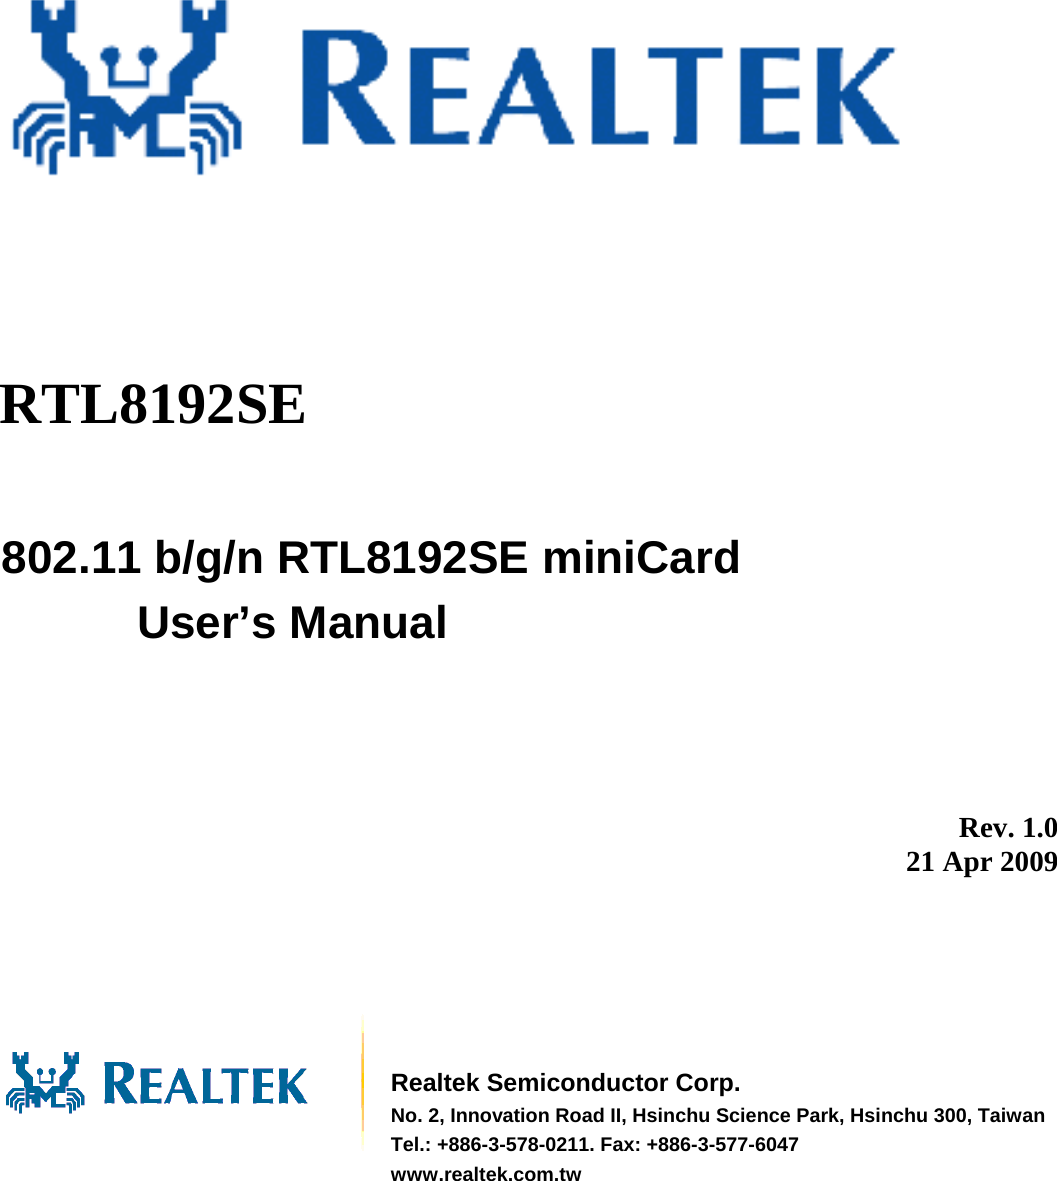                802.11 b/g/n RTL8192SE miniCard User’s Manual          Rev. 1.0 21 Apr 2009        Realtek Semiconductor Corp. No. 2, Innovation Road II, Hsinchu Science Park, Hsinchu 300, TaiwanTel.: +886-3-578-0211. Fax: +886-3-577-6047 www.realtek.com.tw RTL8192SE 